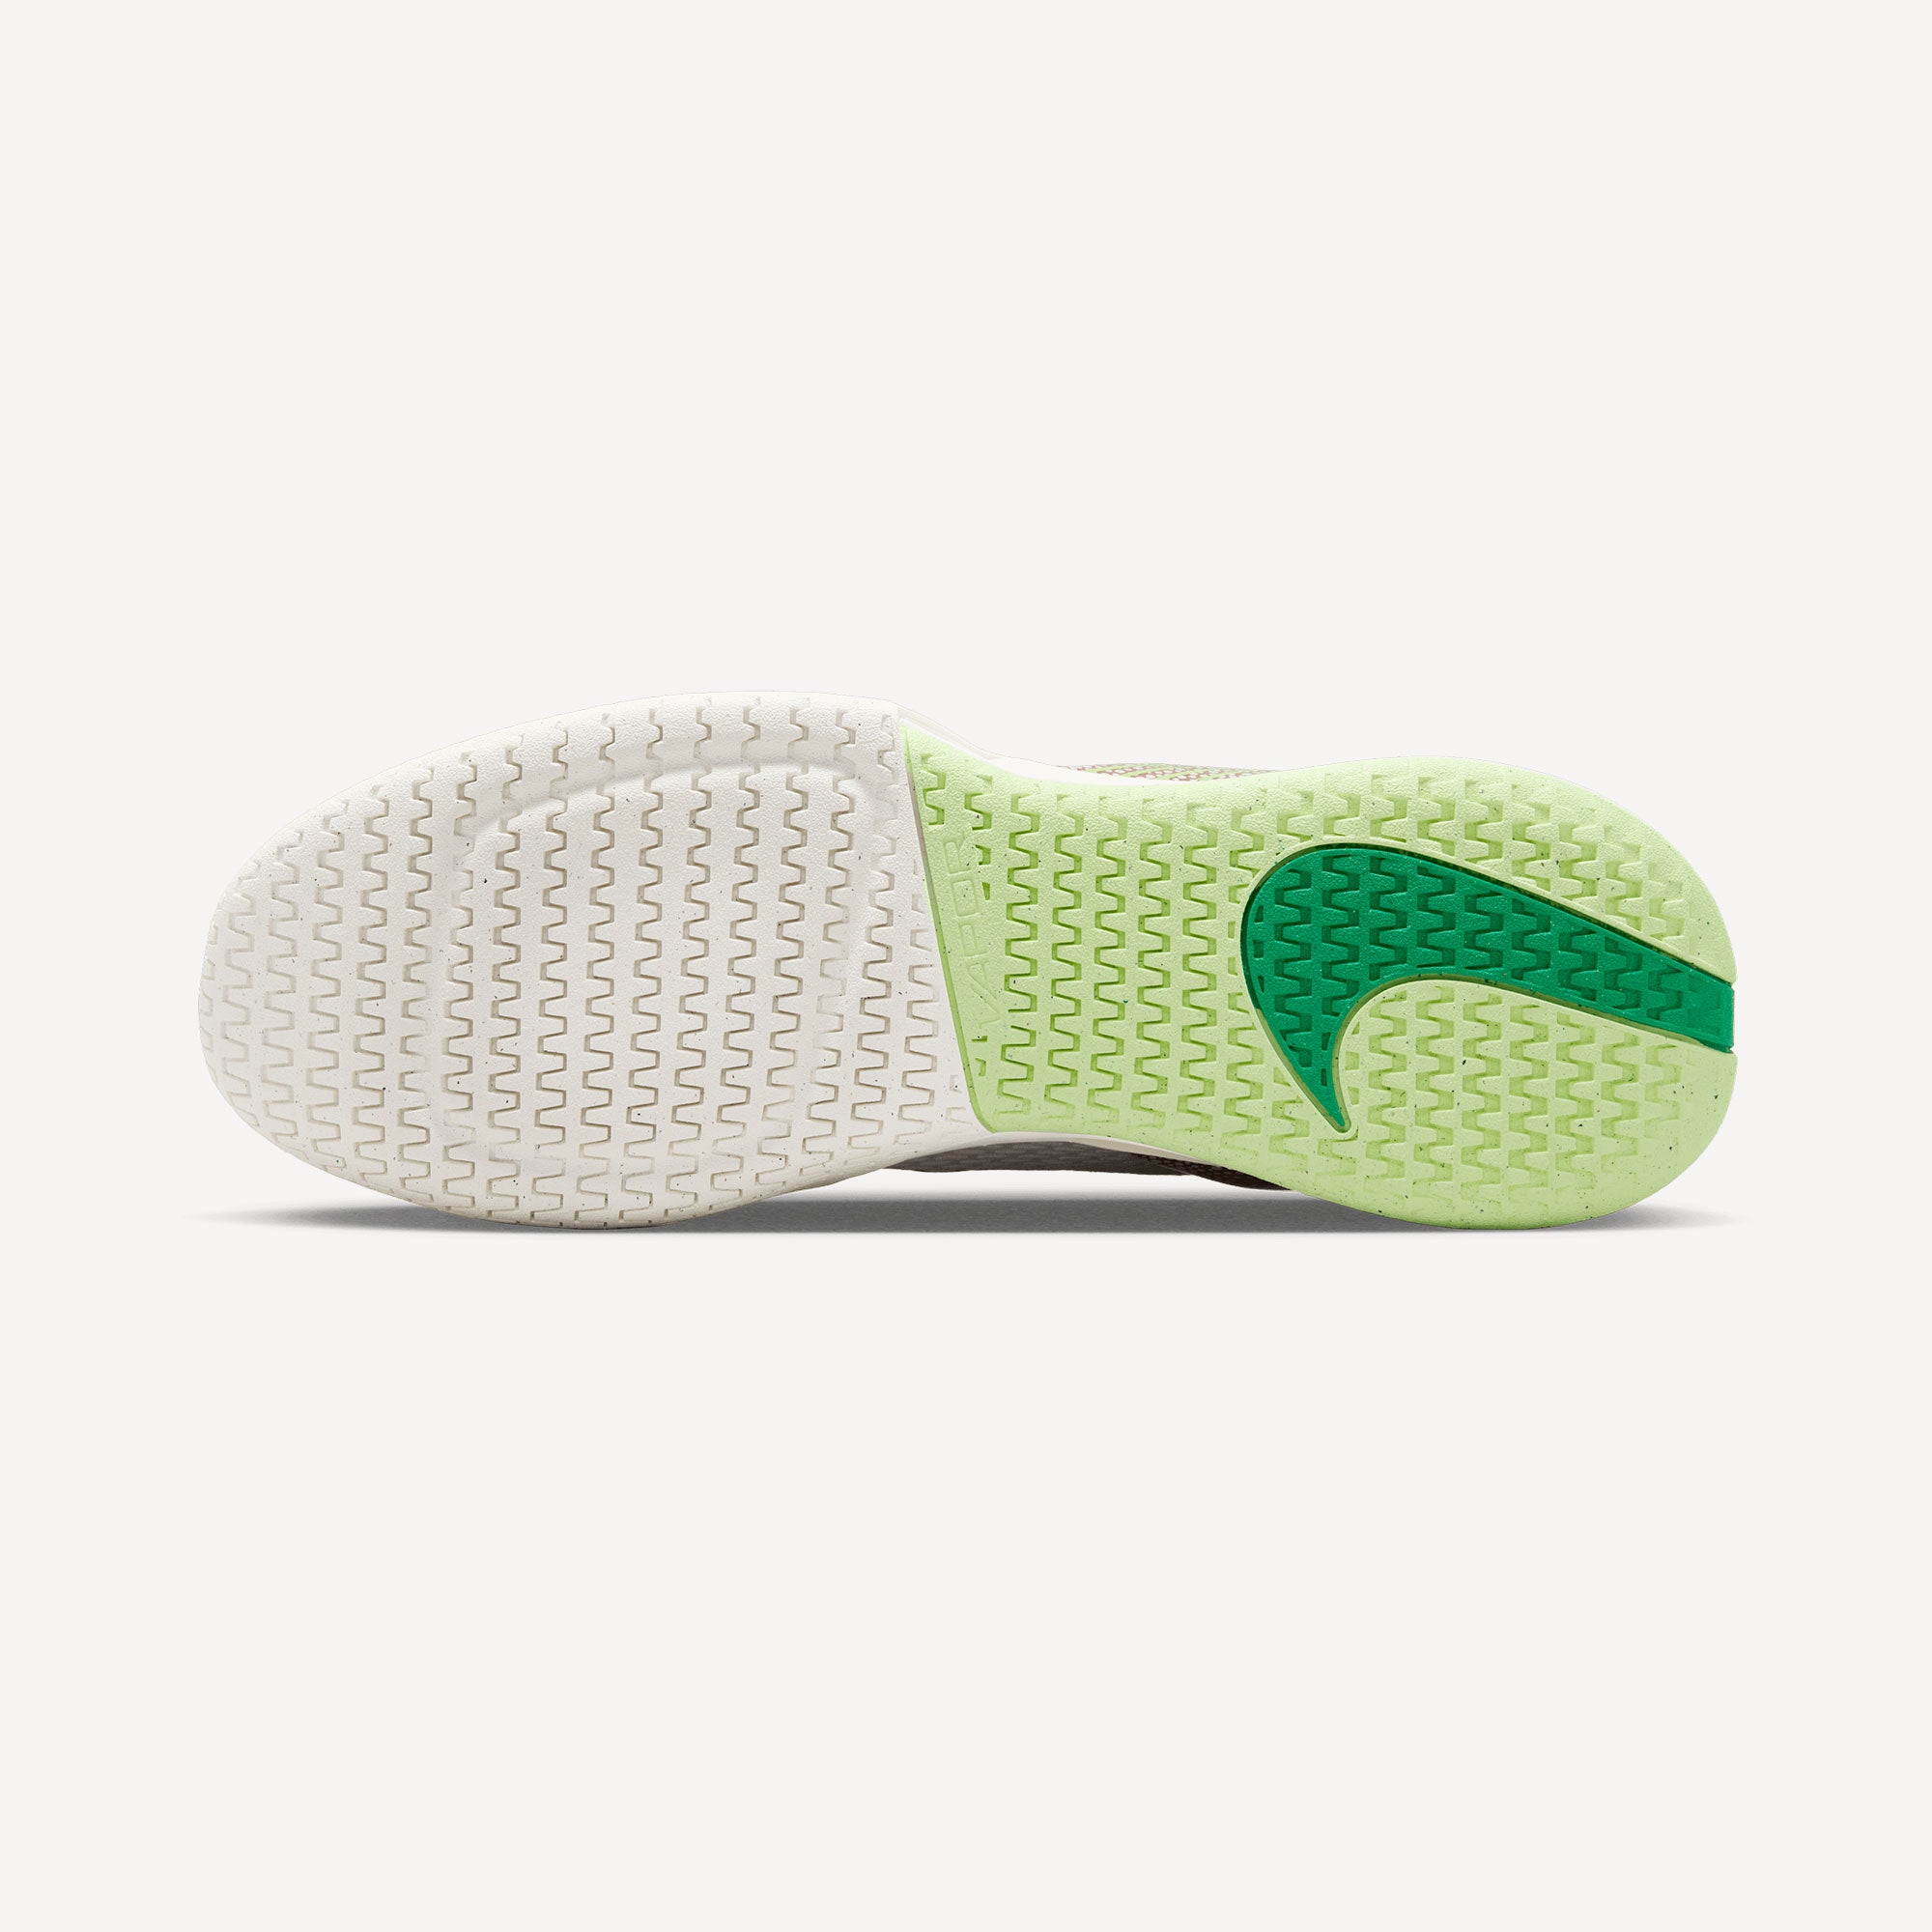 NikeCourt Air Zoom Vapor Pro 2 Premium Men's Hard Court Tennis Shoes - Grey (2)